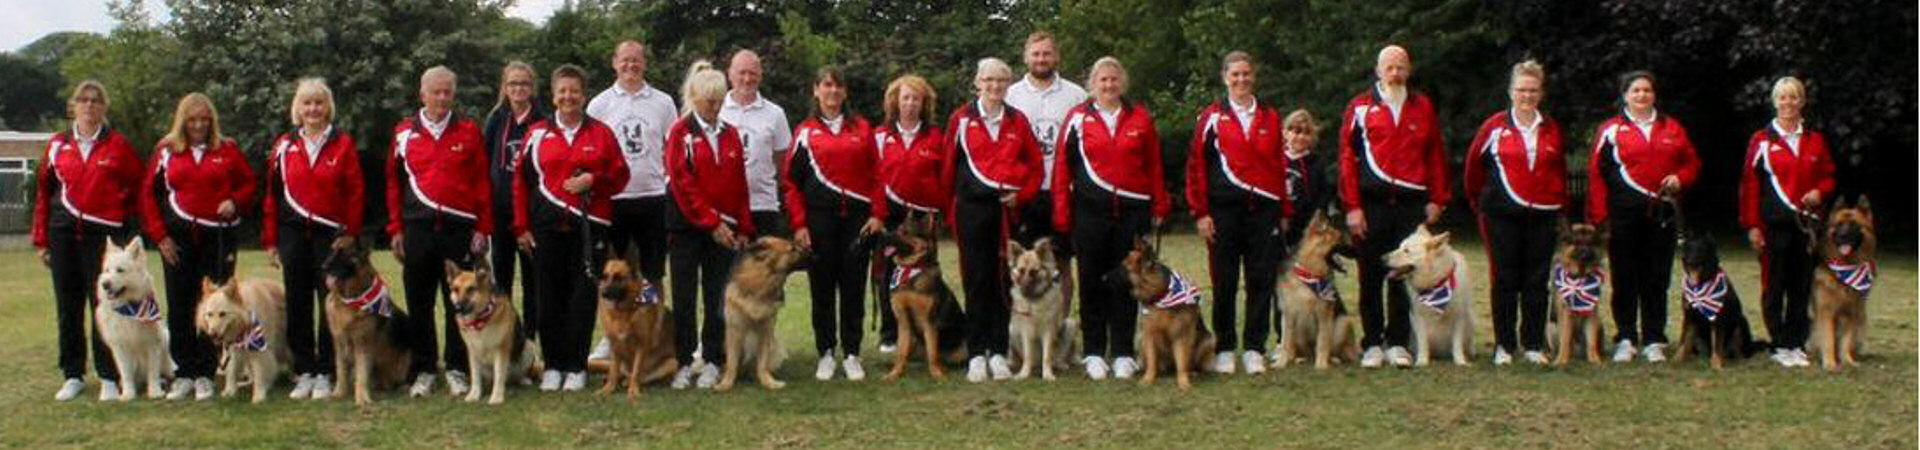 Duston German Shepherd Dog Training Club and Pacesetters Display Team